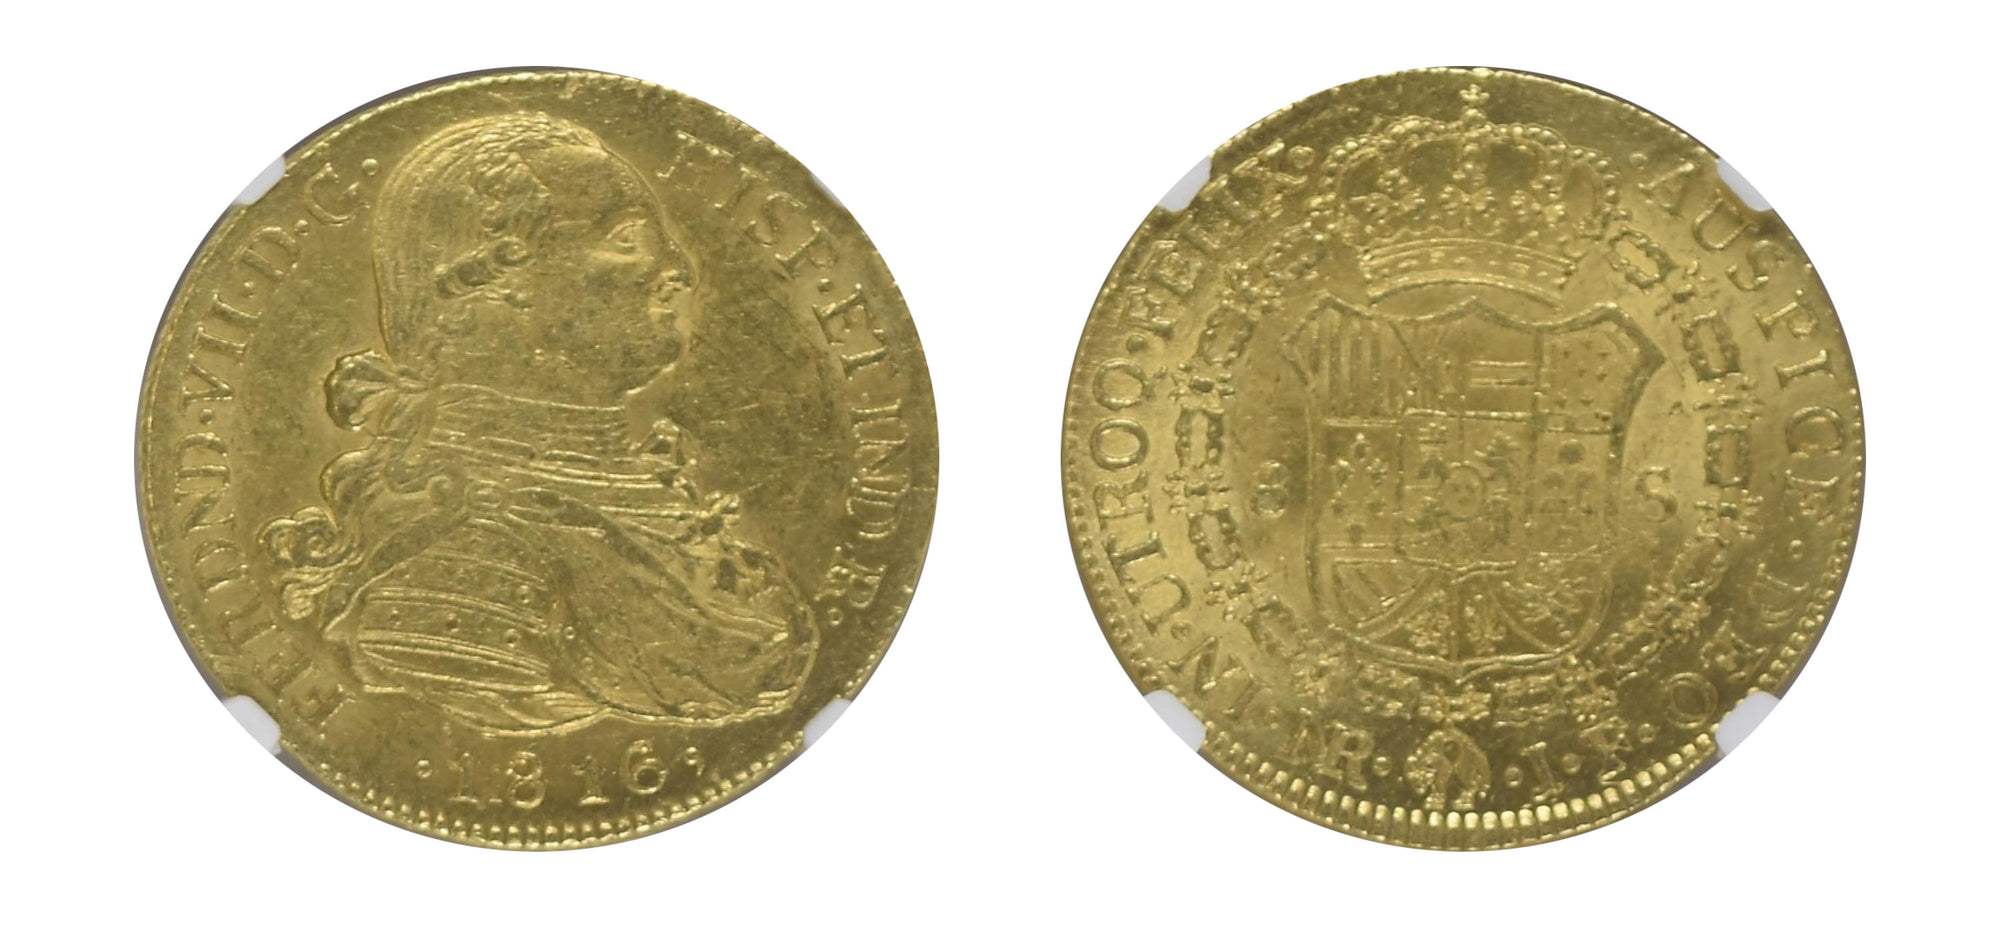 1816 Gold 8 Escudos NGC MS62 - Hard Asset Management, Inc